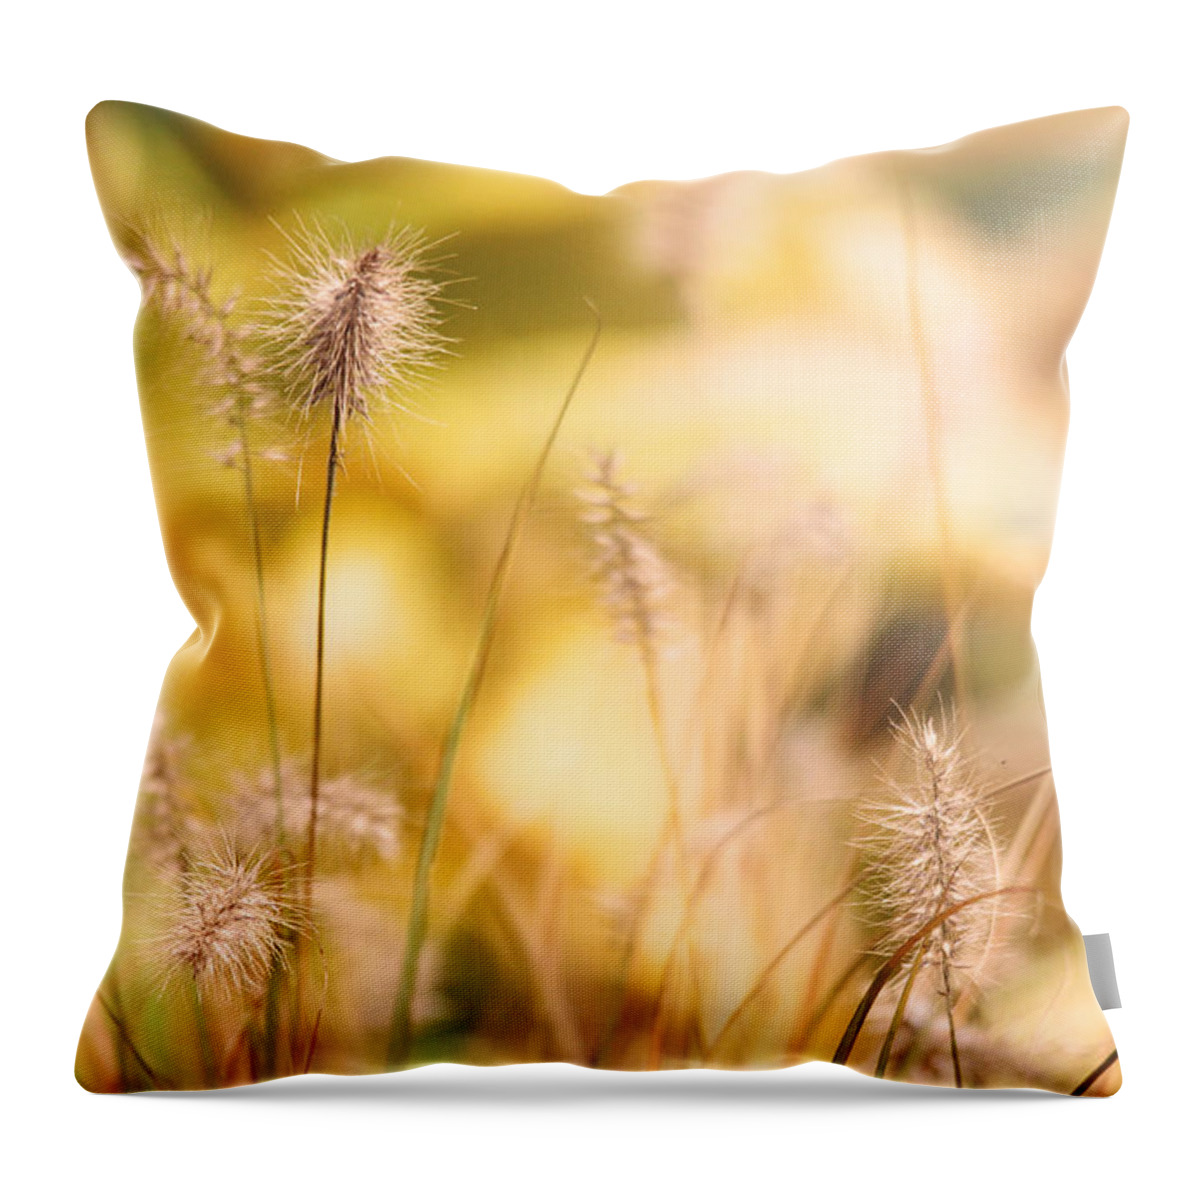 Autumn Throw Pillow featuring the photograph Golden Light of Autumn by Trina Ansel